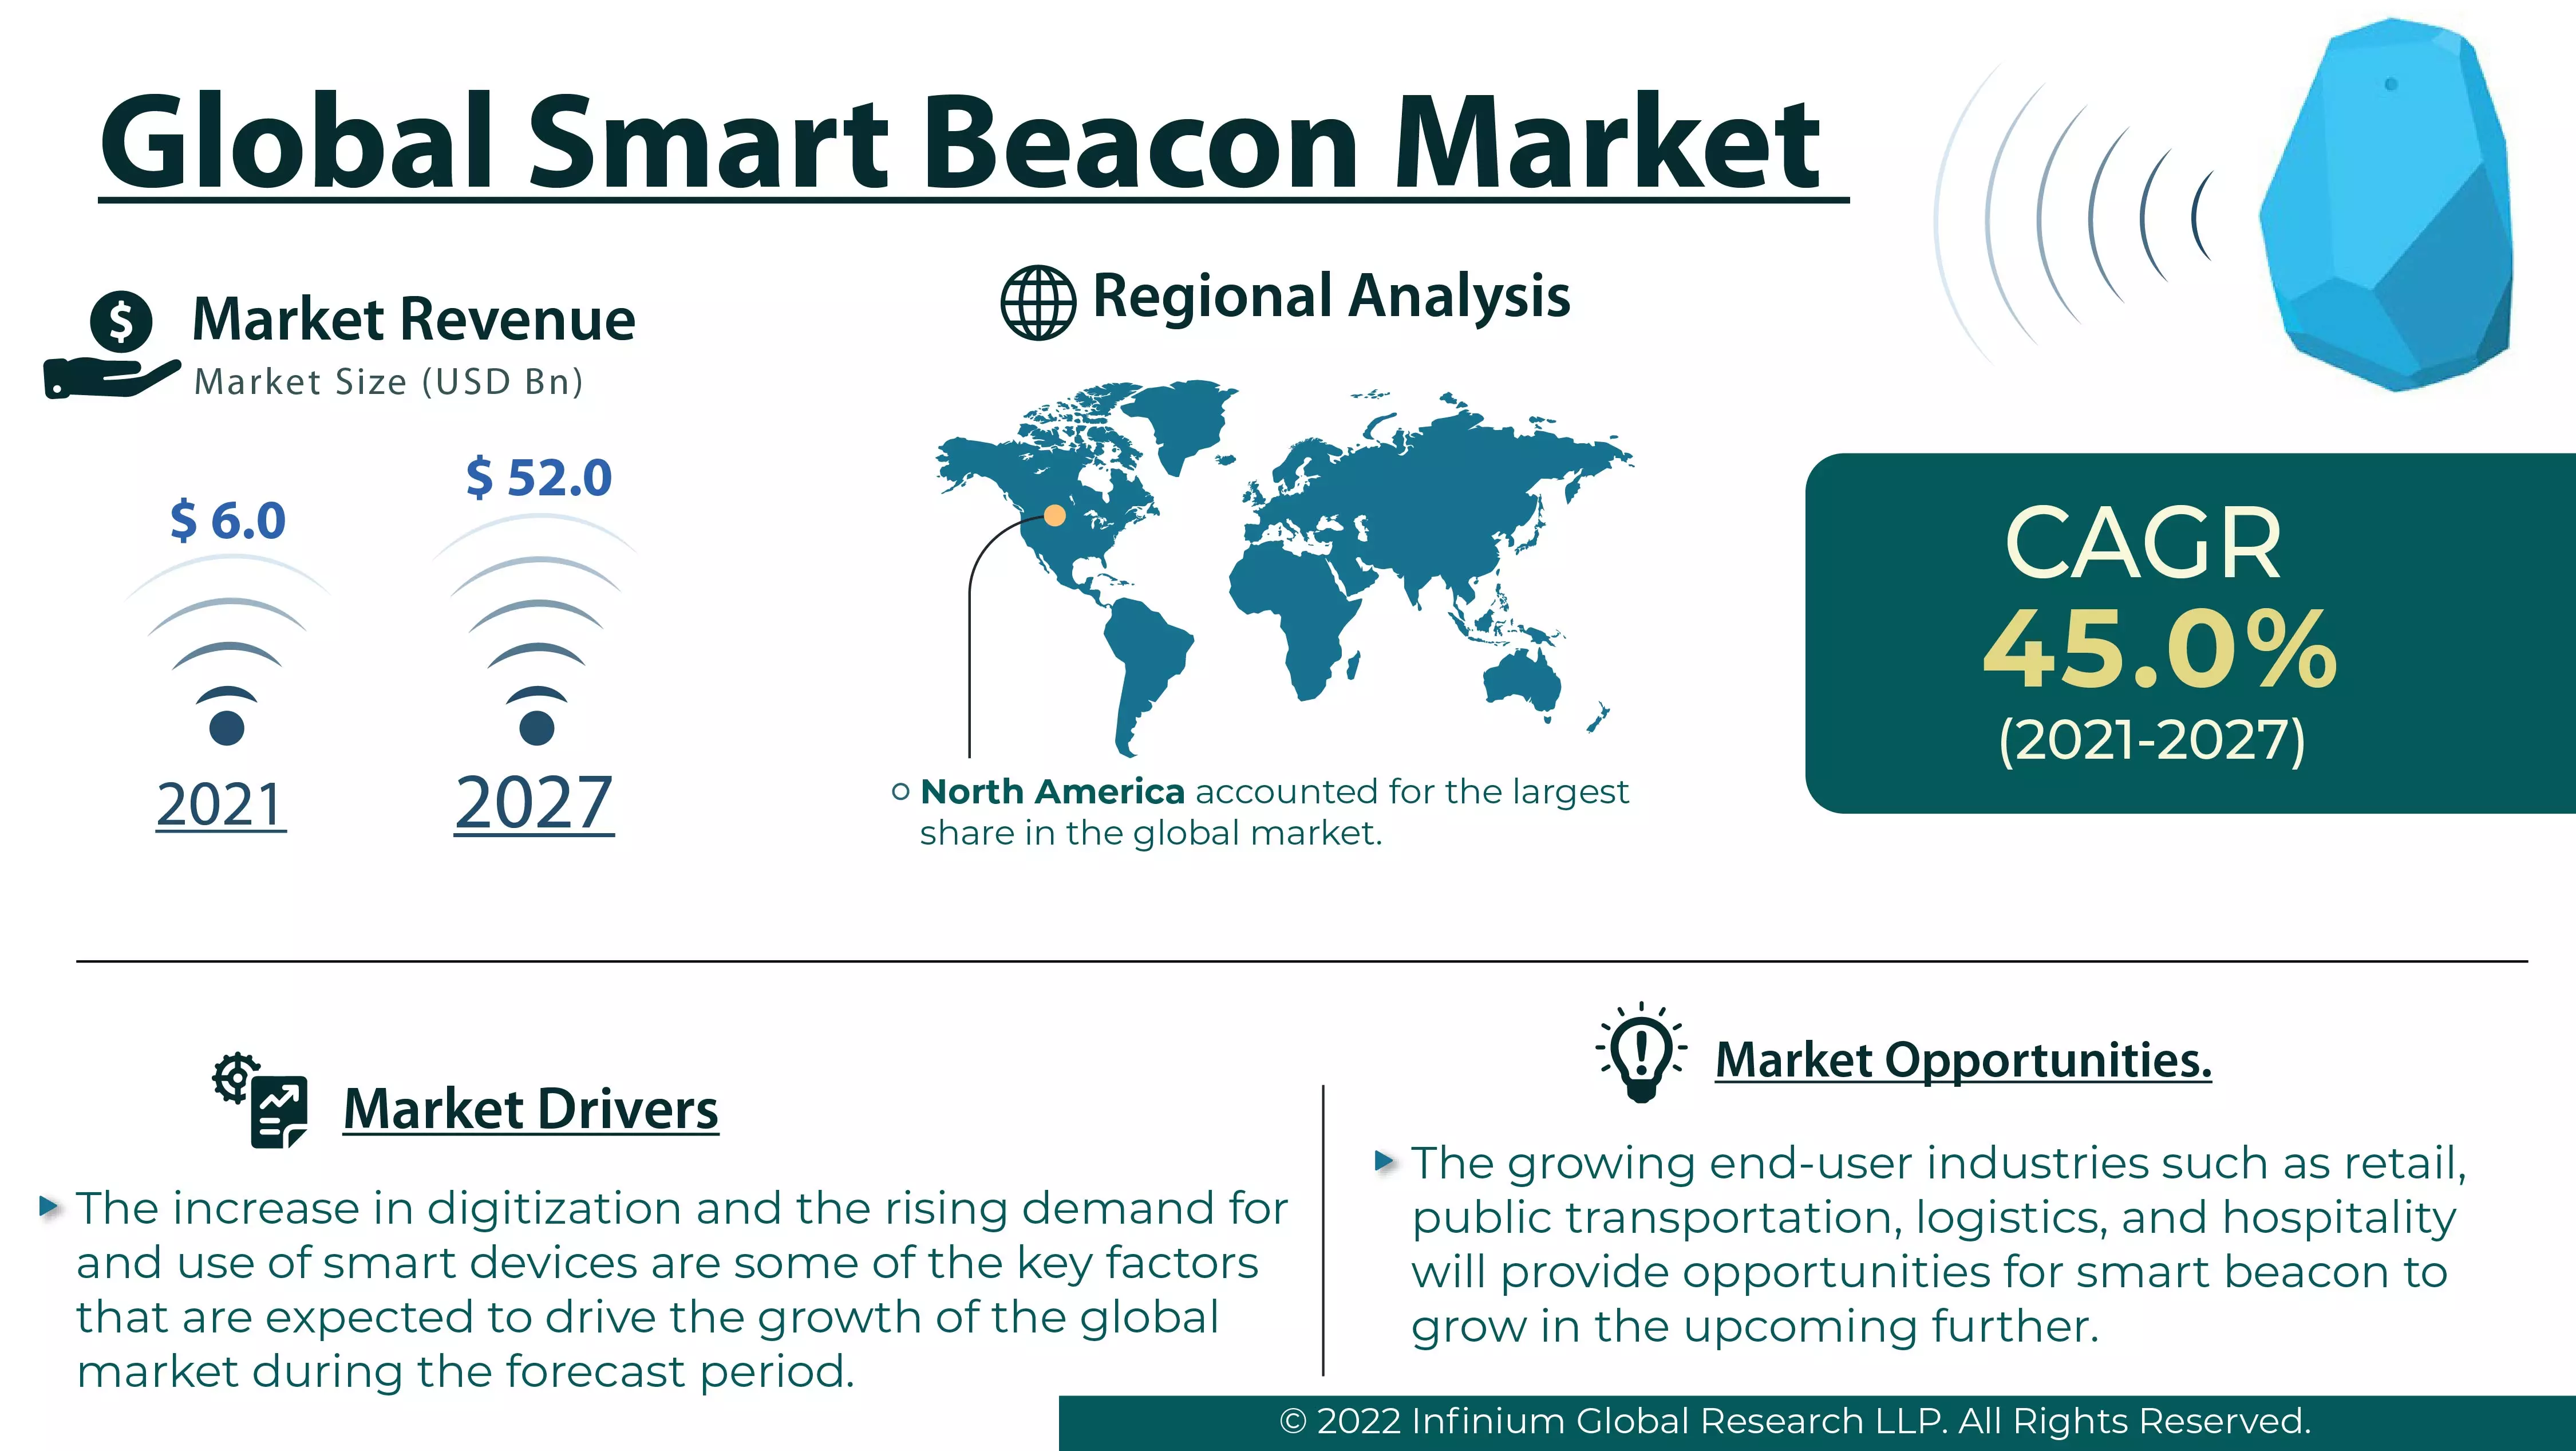 Smart Beacon Market